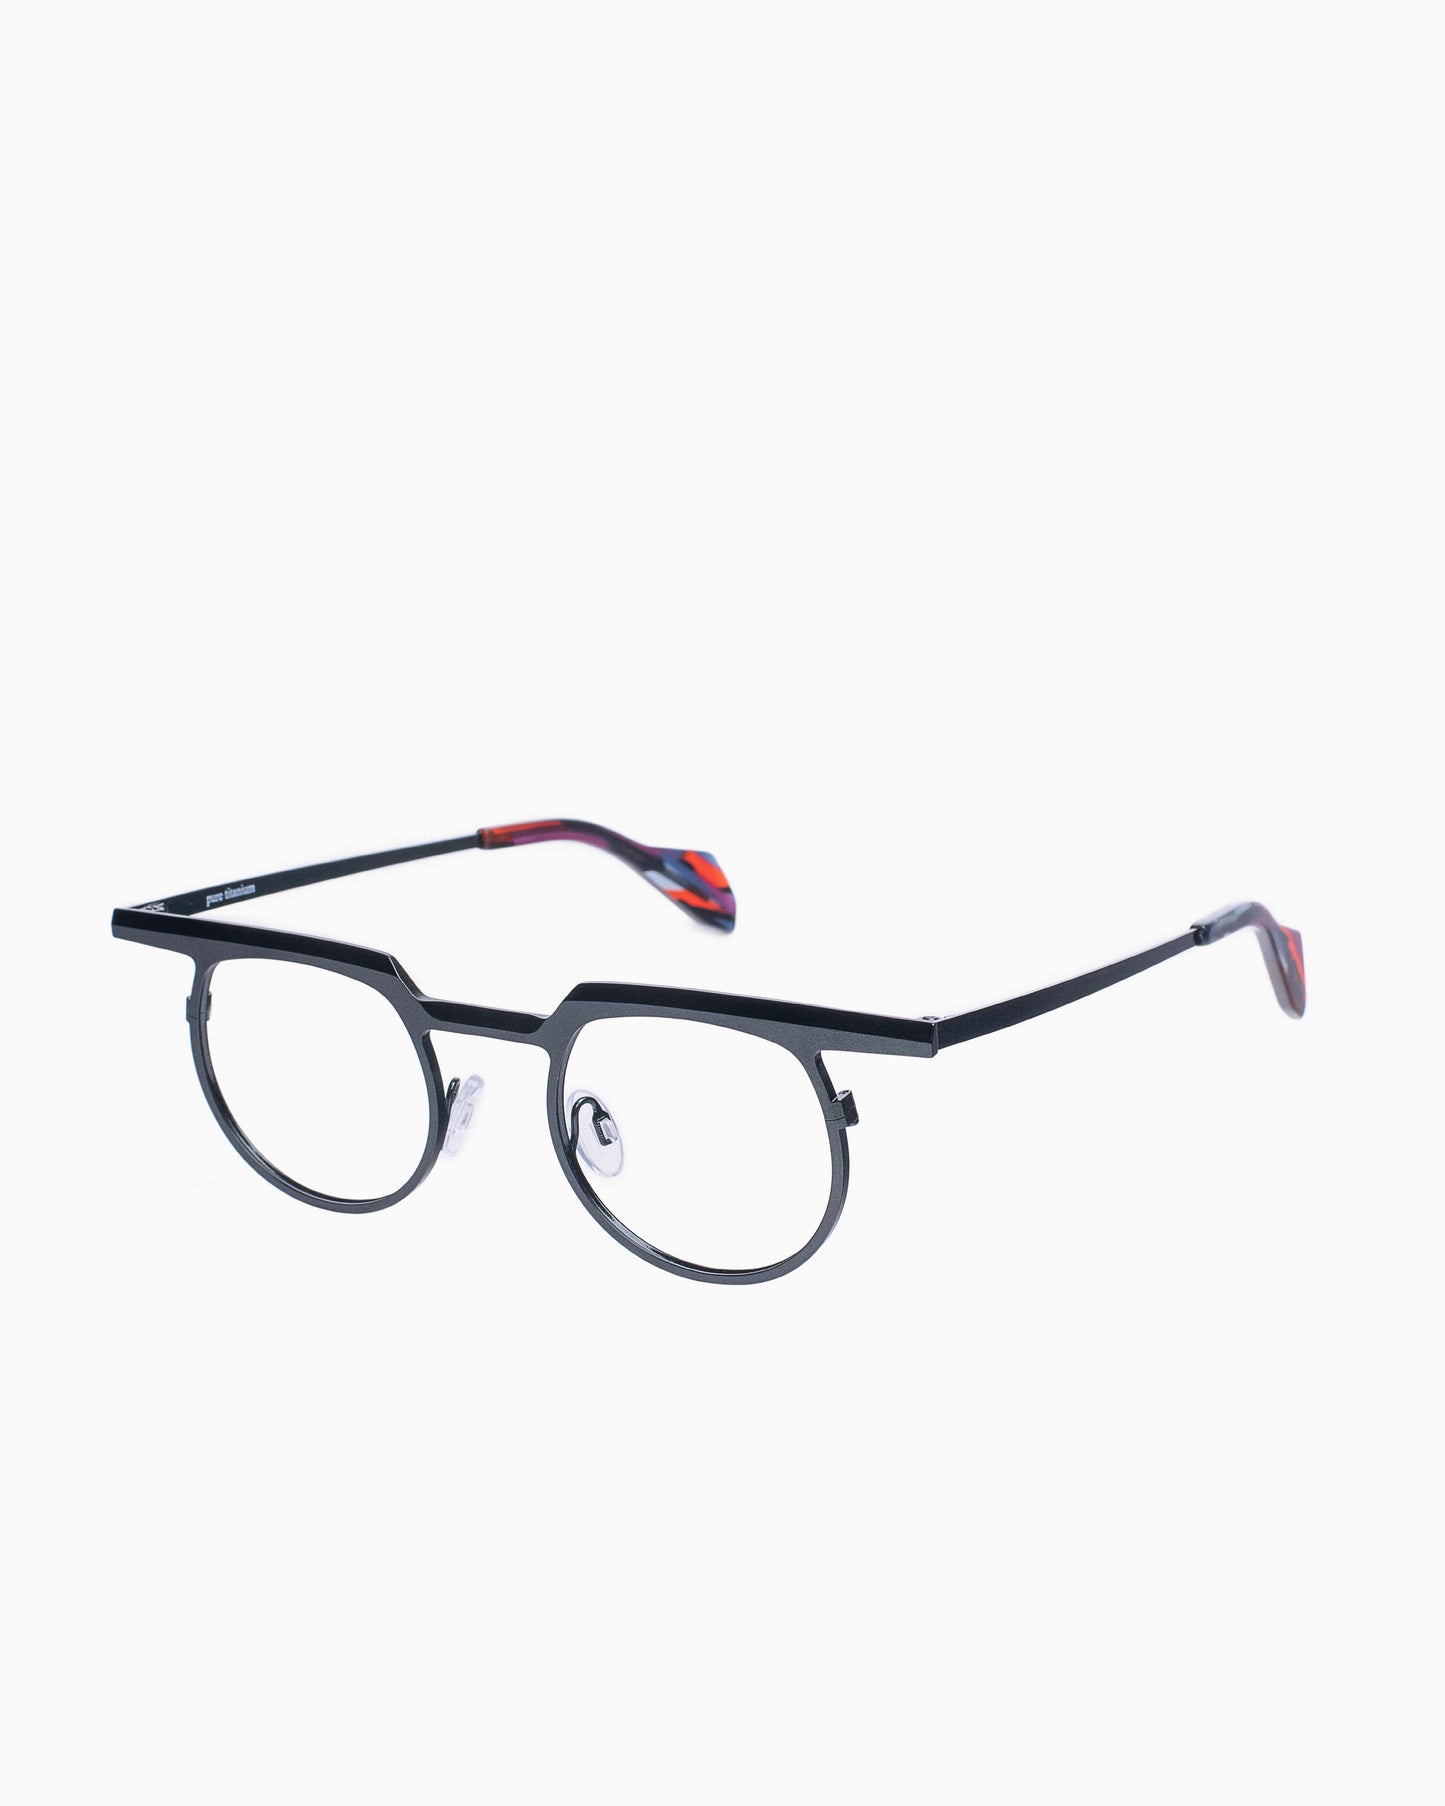 Theo - Zinnia - 501 | glasses bar